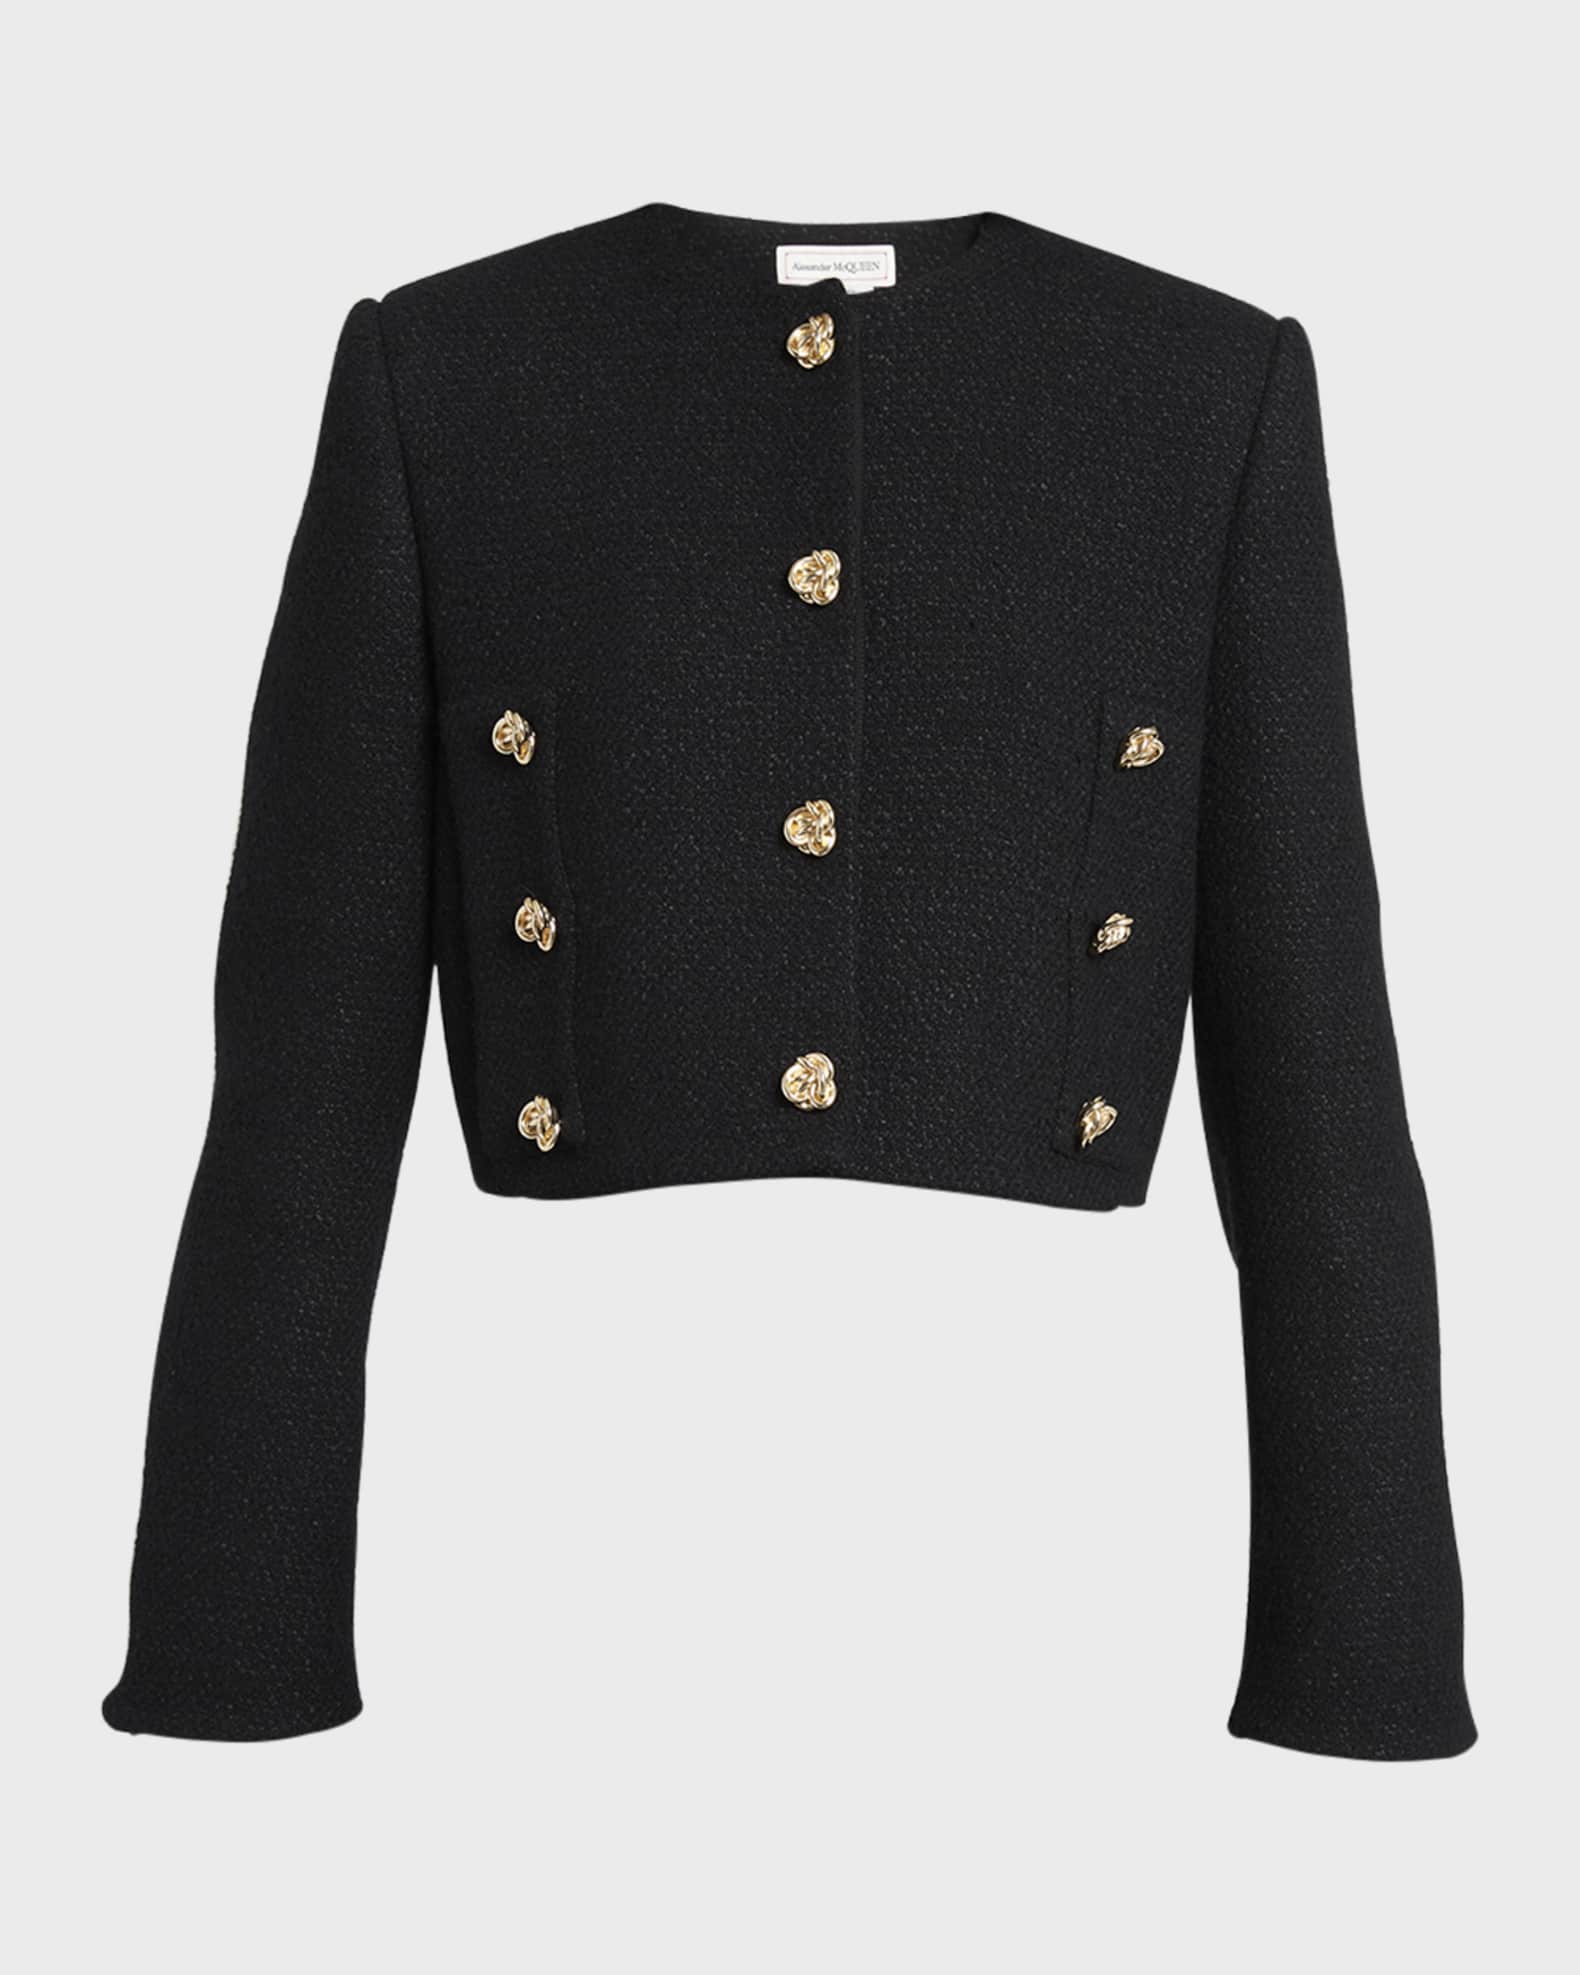 Alexander McQueen Tweed Short Jacket with Gold Knot Buttons | Neiman Marcus